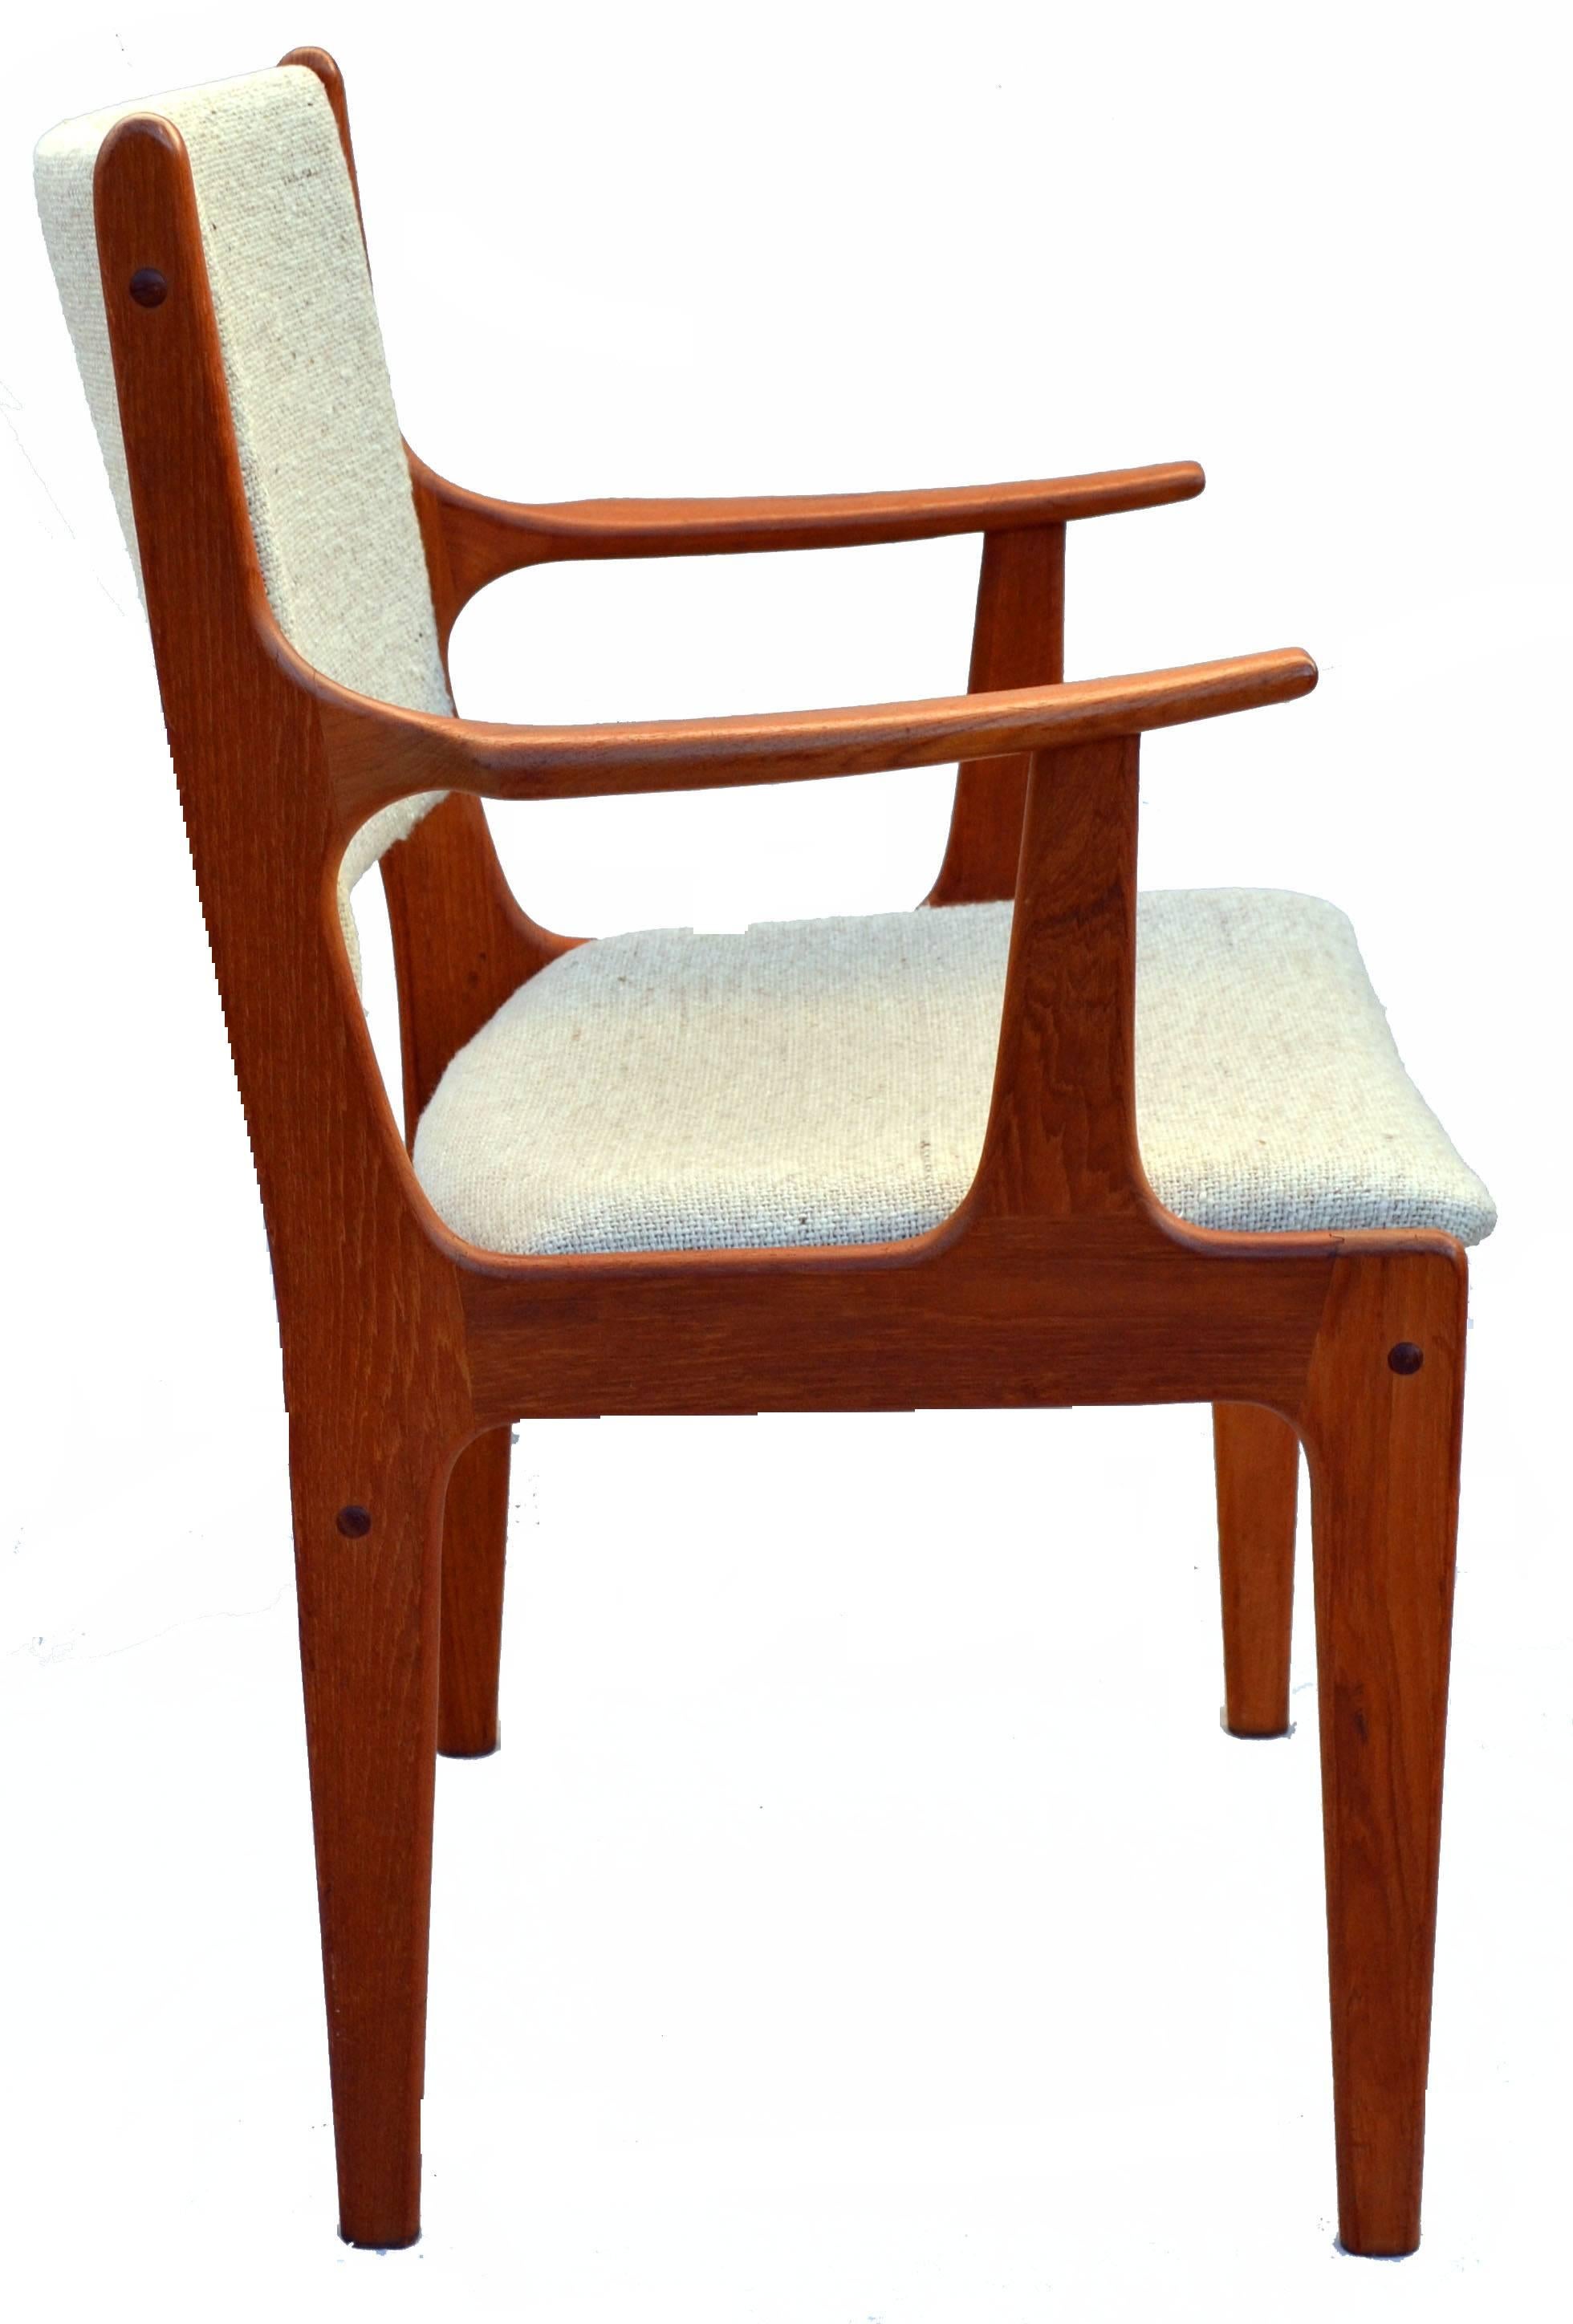 American Danish Modern Chair D-Scan